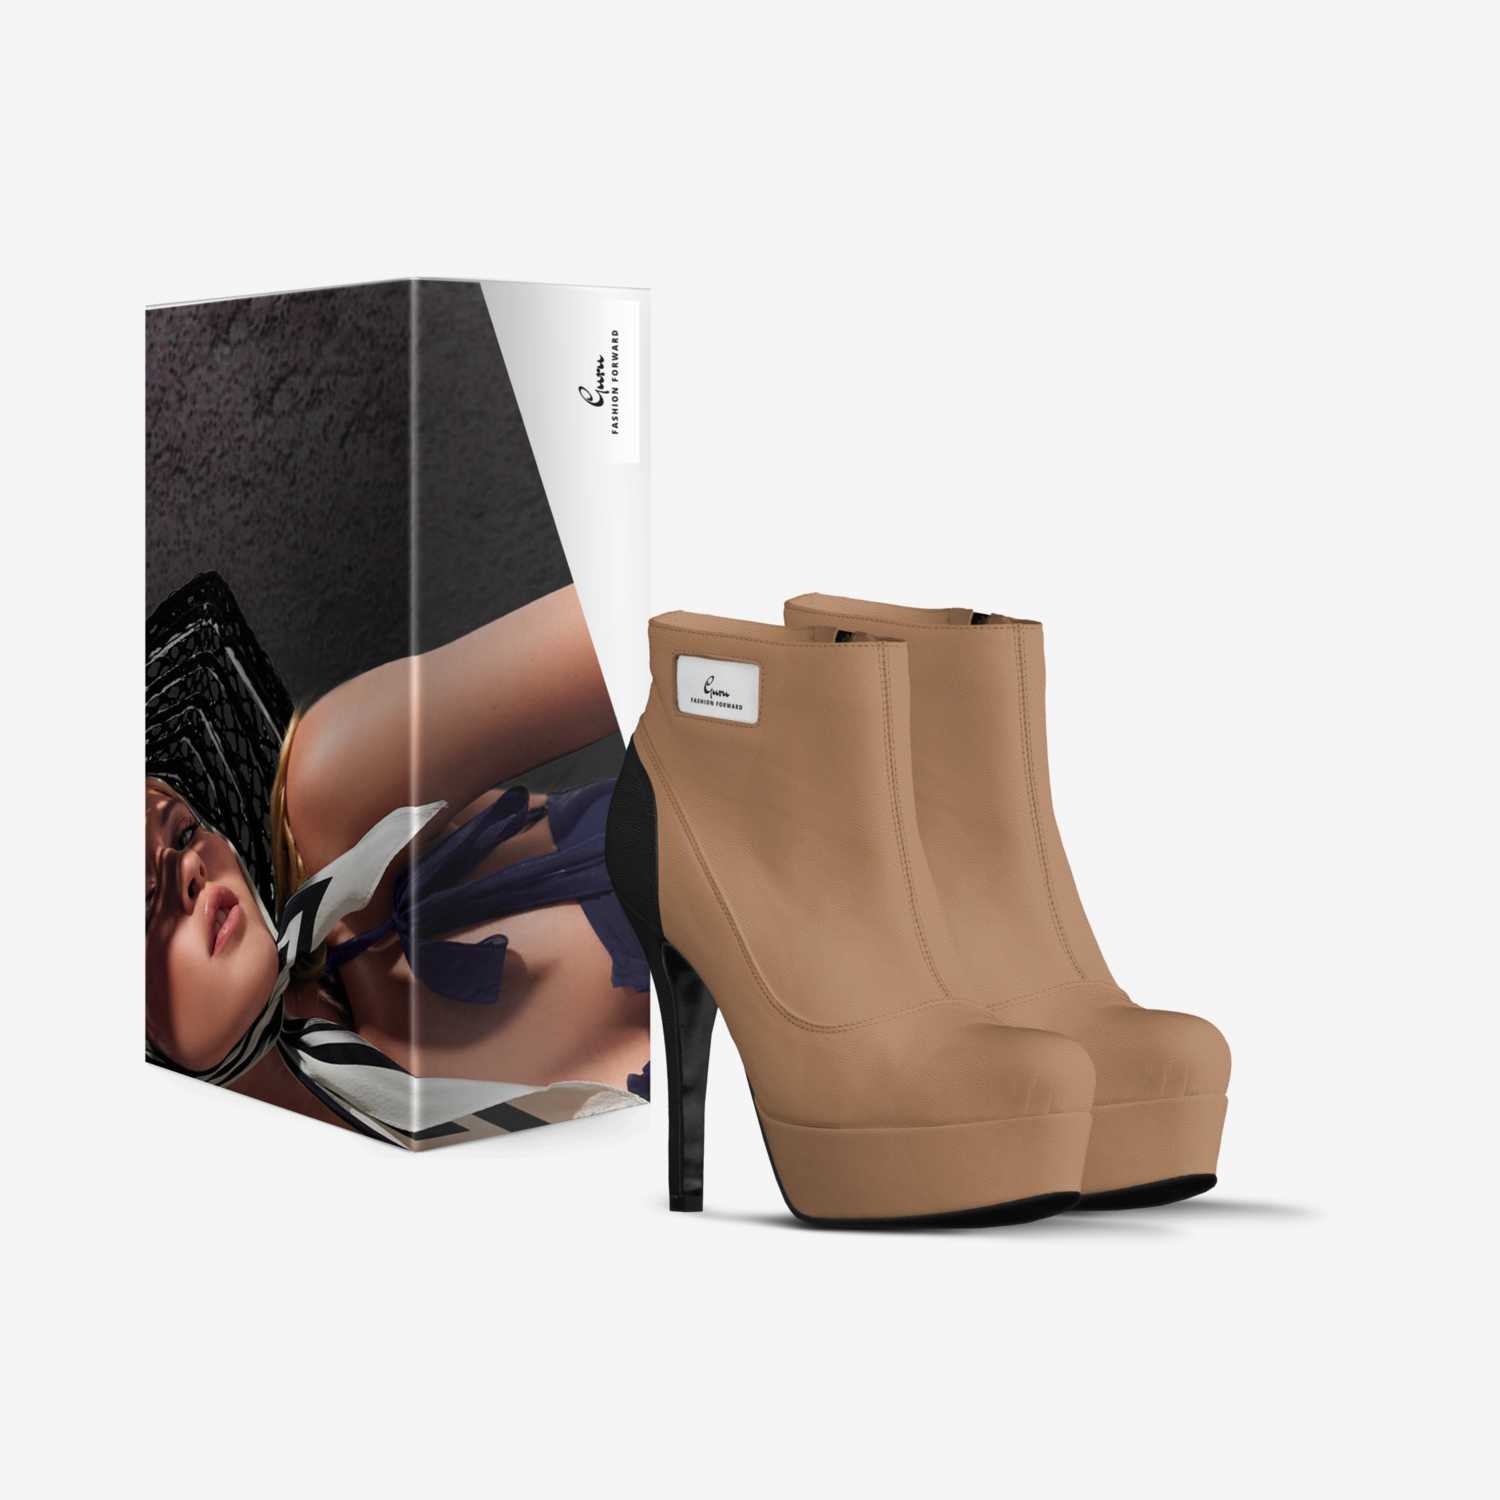 Guru custom made in Italy shoes by Alejandro Ortiz | Box view